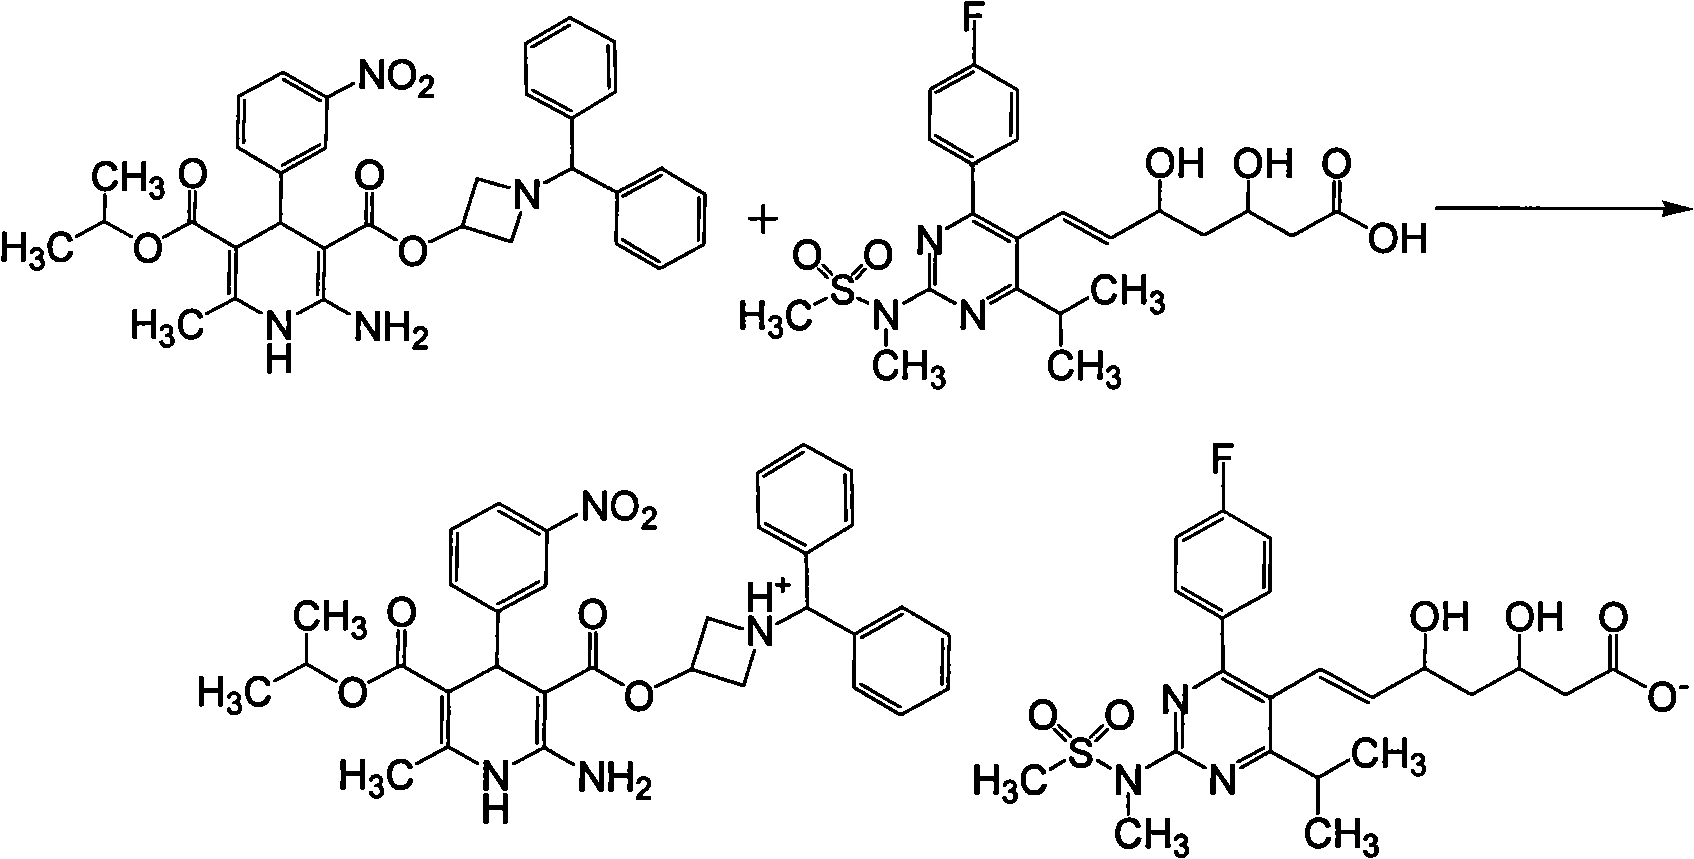 Rosuvastatin azelnidipine composition